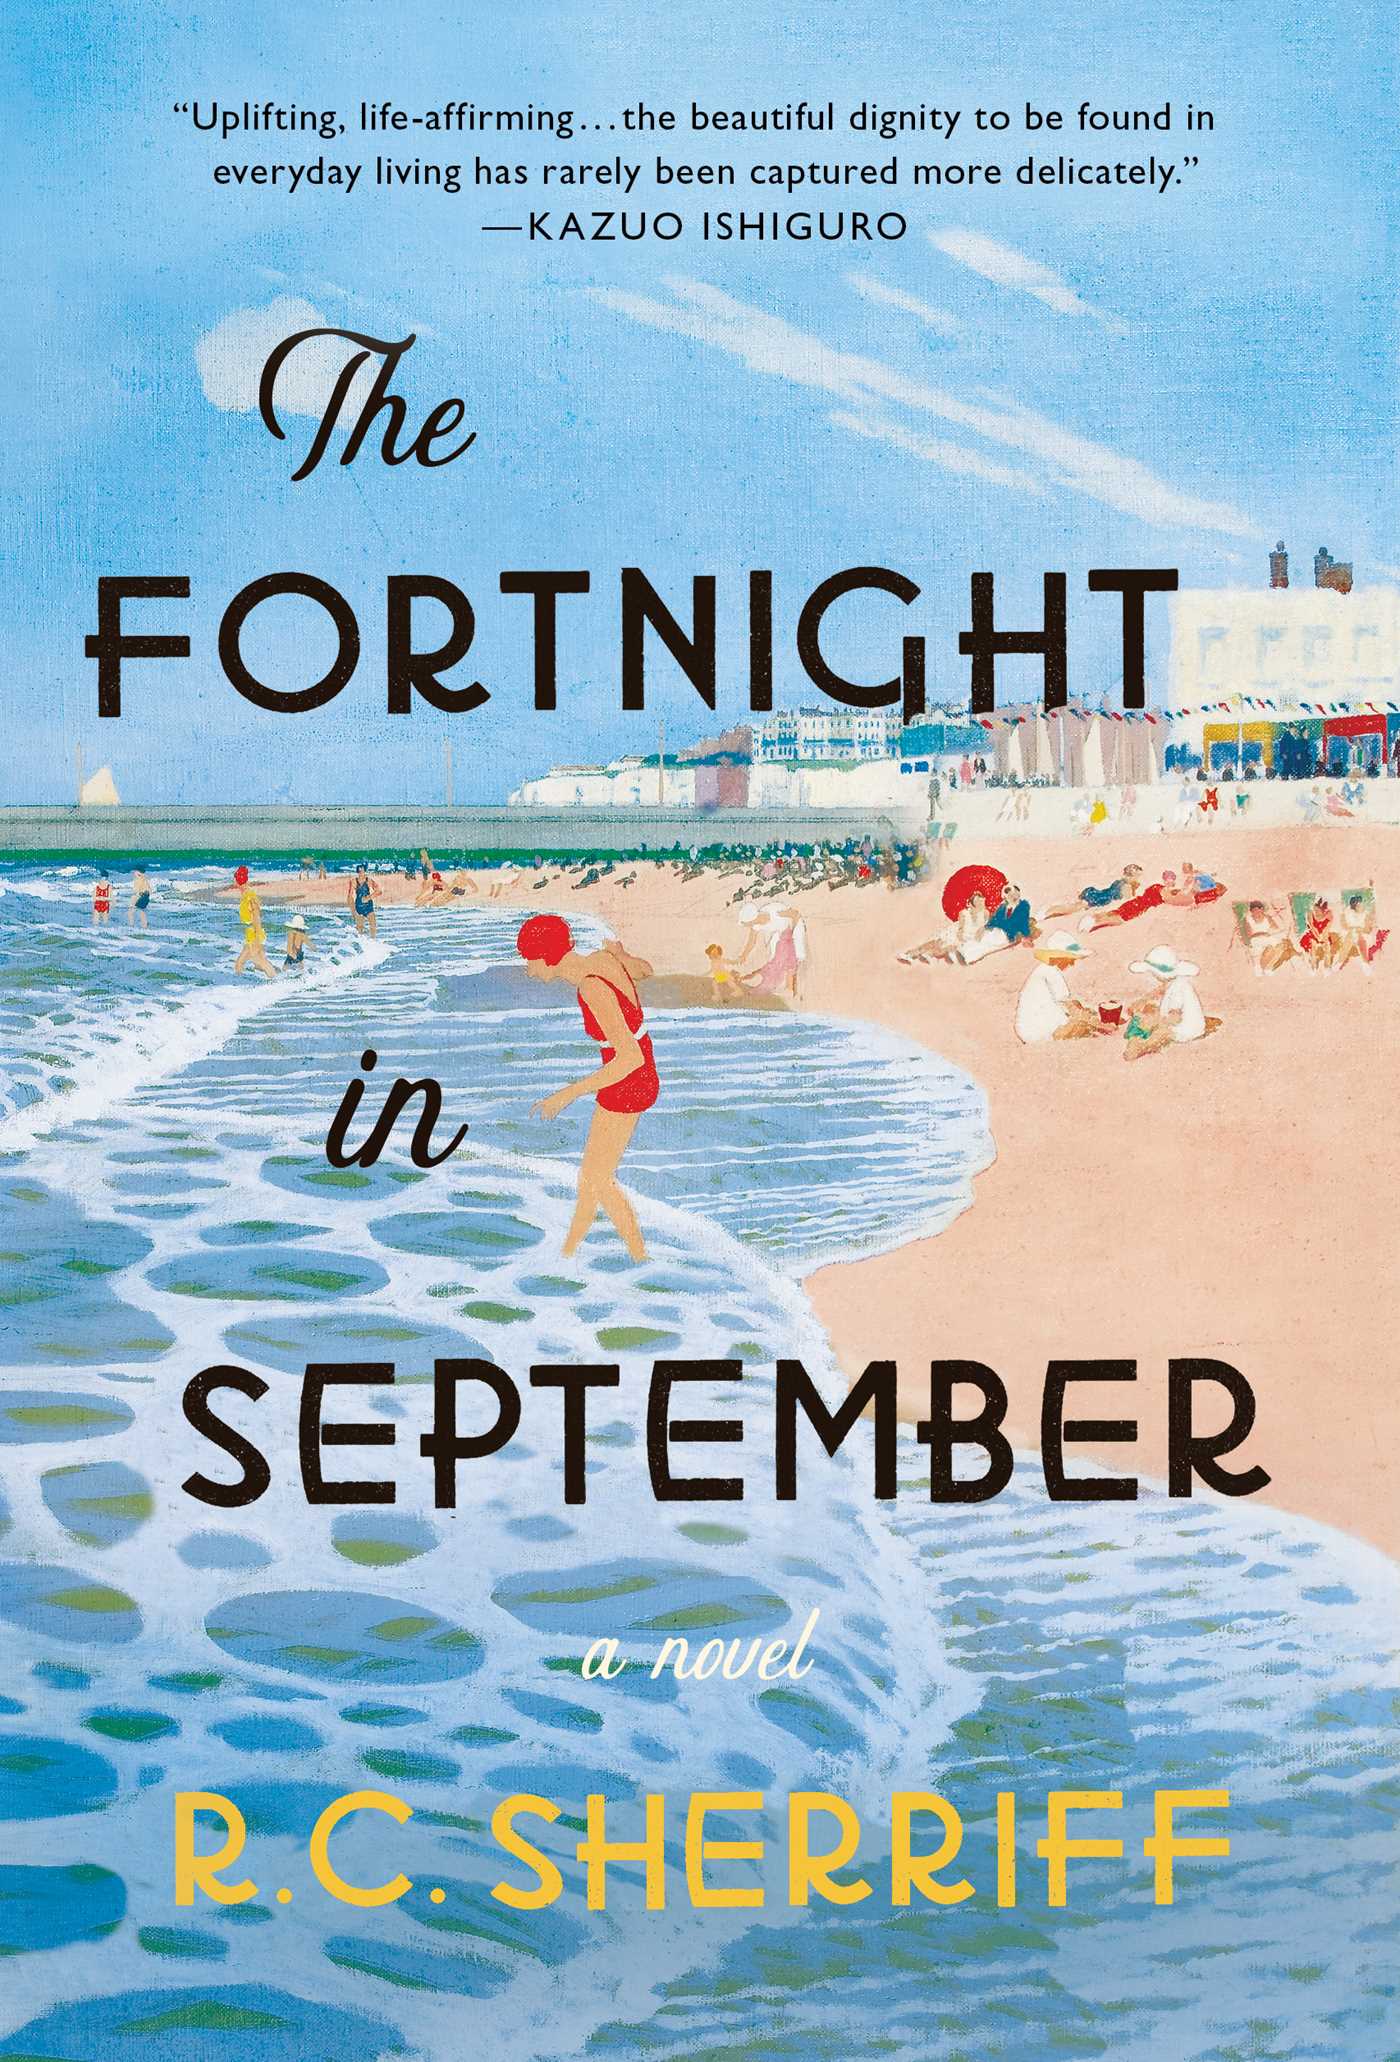 The Fortnight in September by R. C. Sherriff